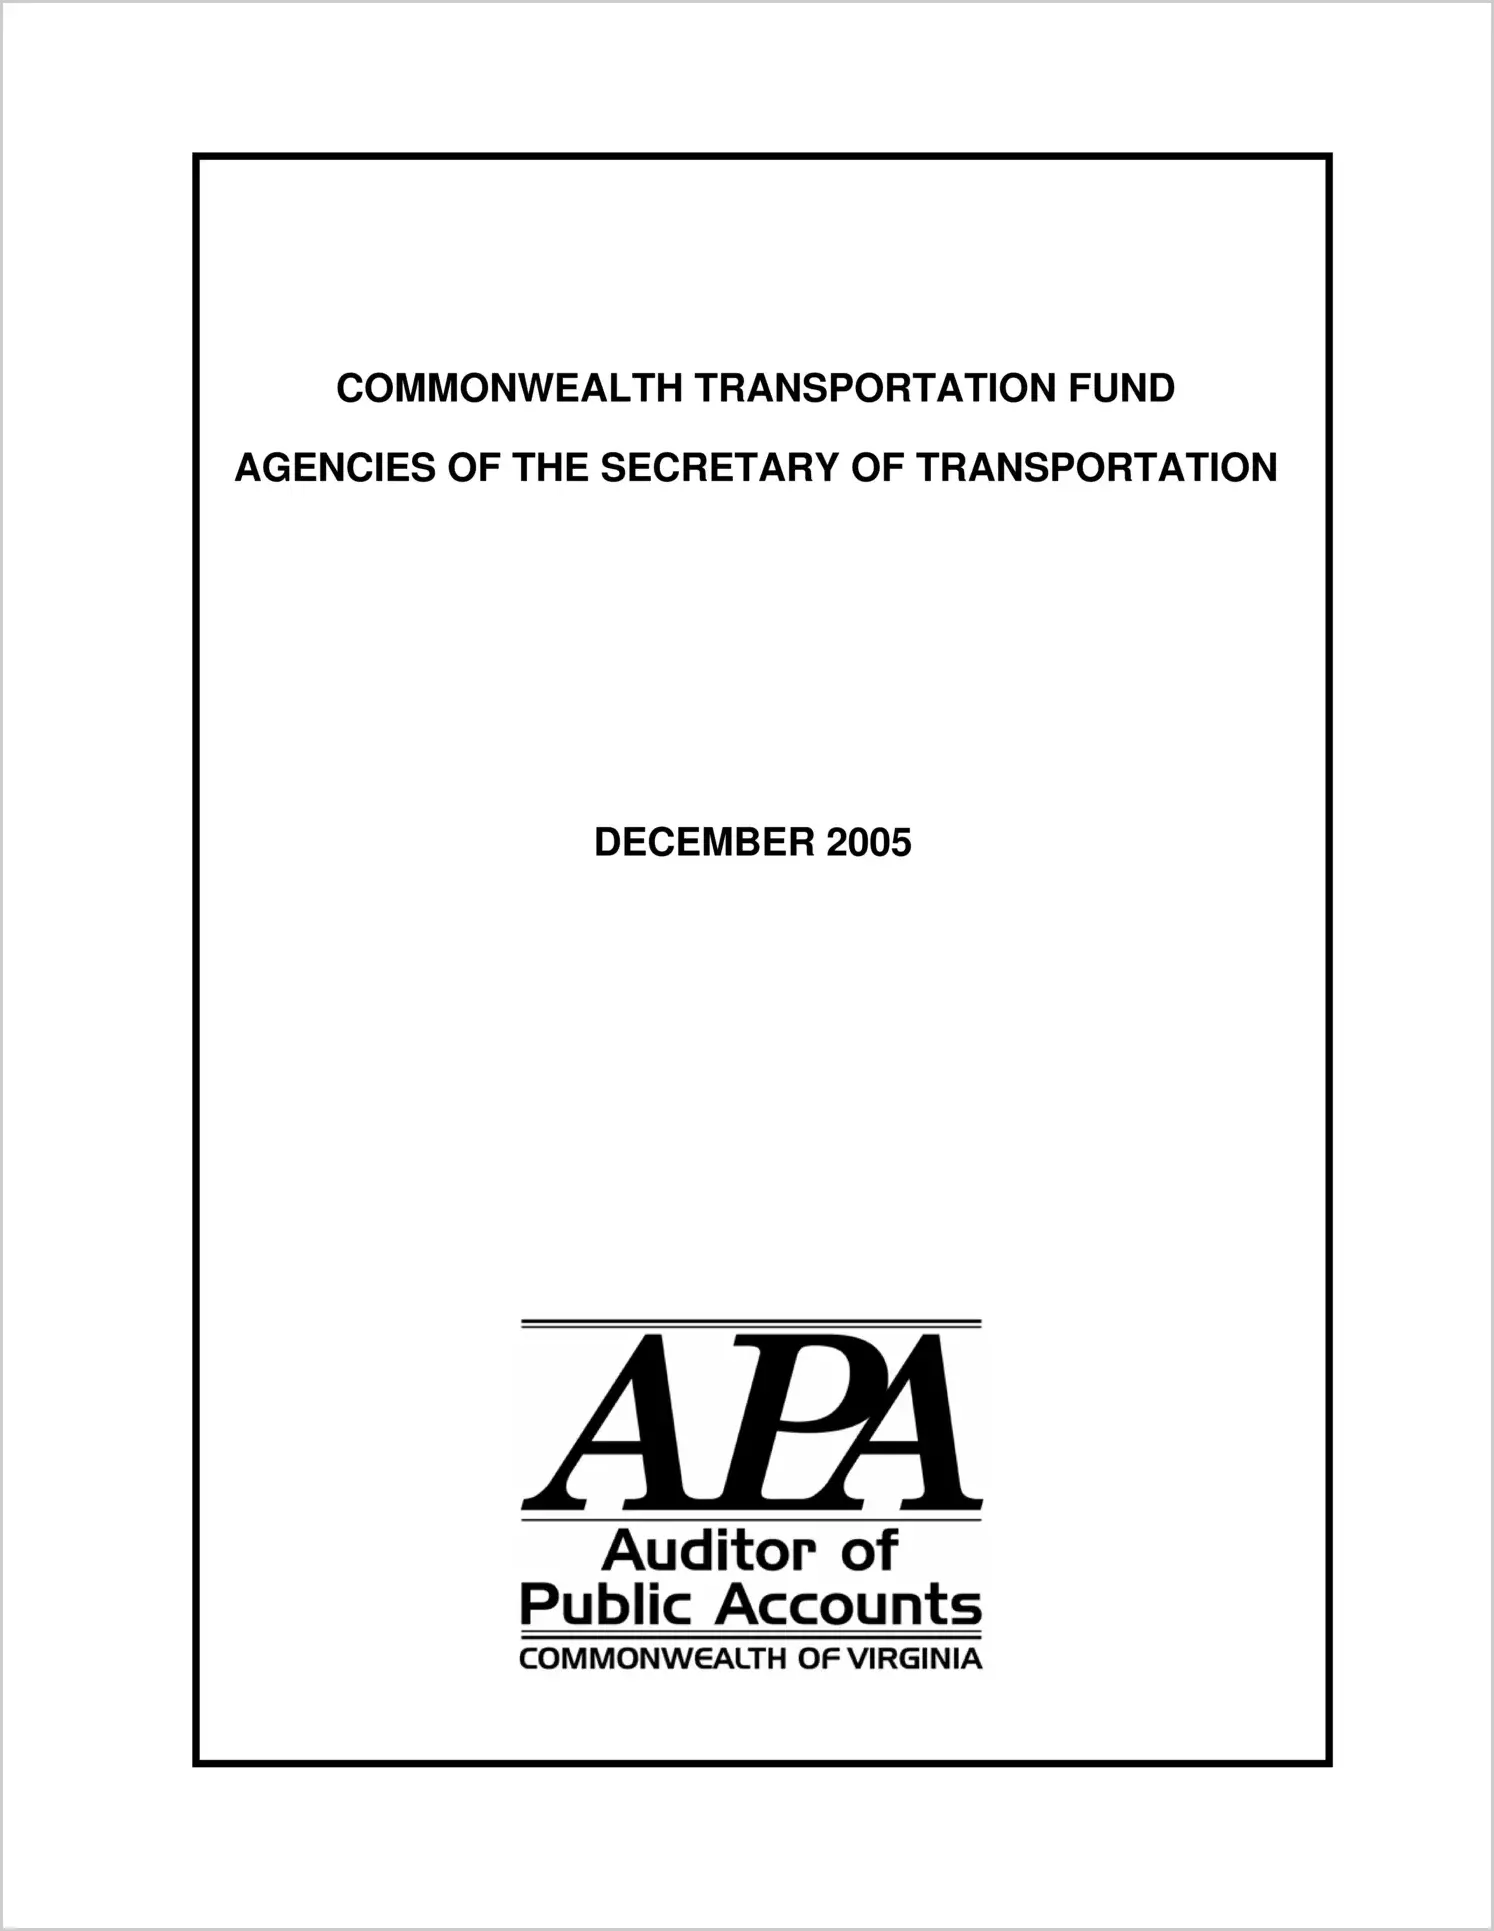 Commonwealth Transportation Fund - Agencies of the Secretary Of Transportation (Report Date: December 2005)